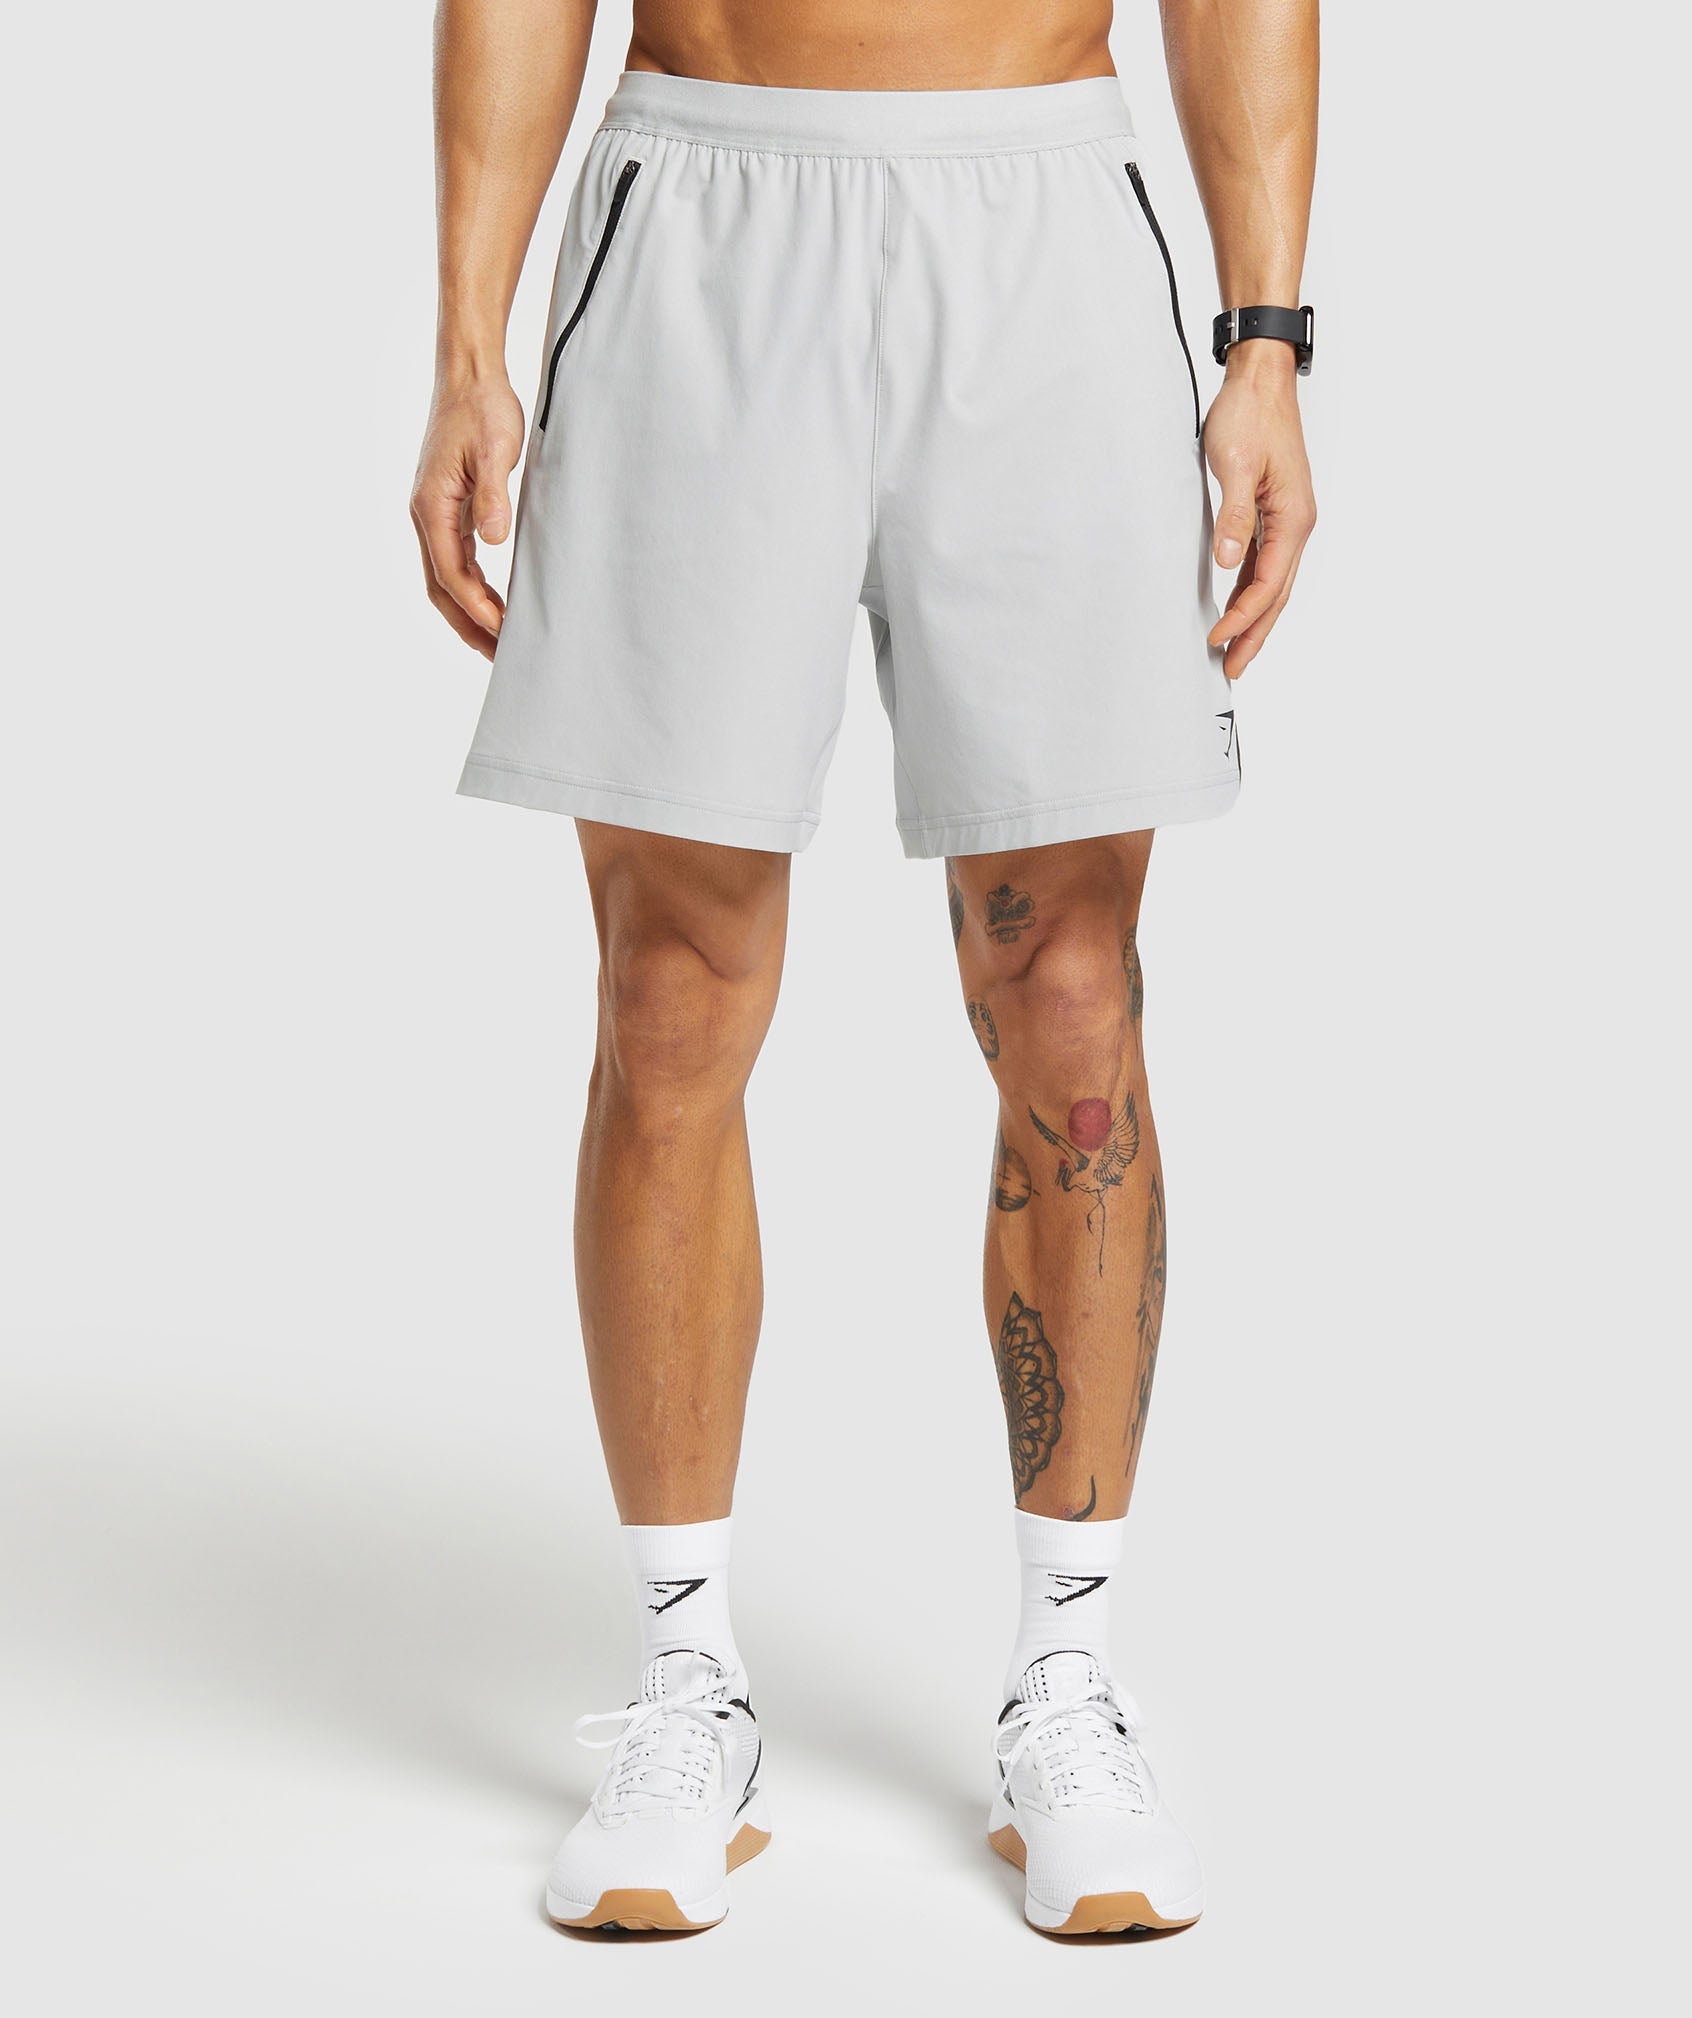 Apex 7" Hybrid Shorts in Light Grey - view 1